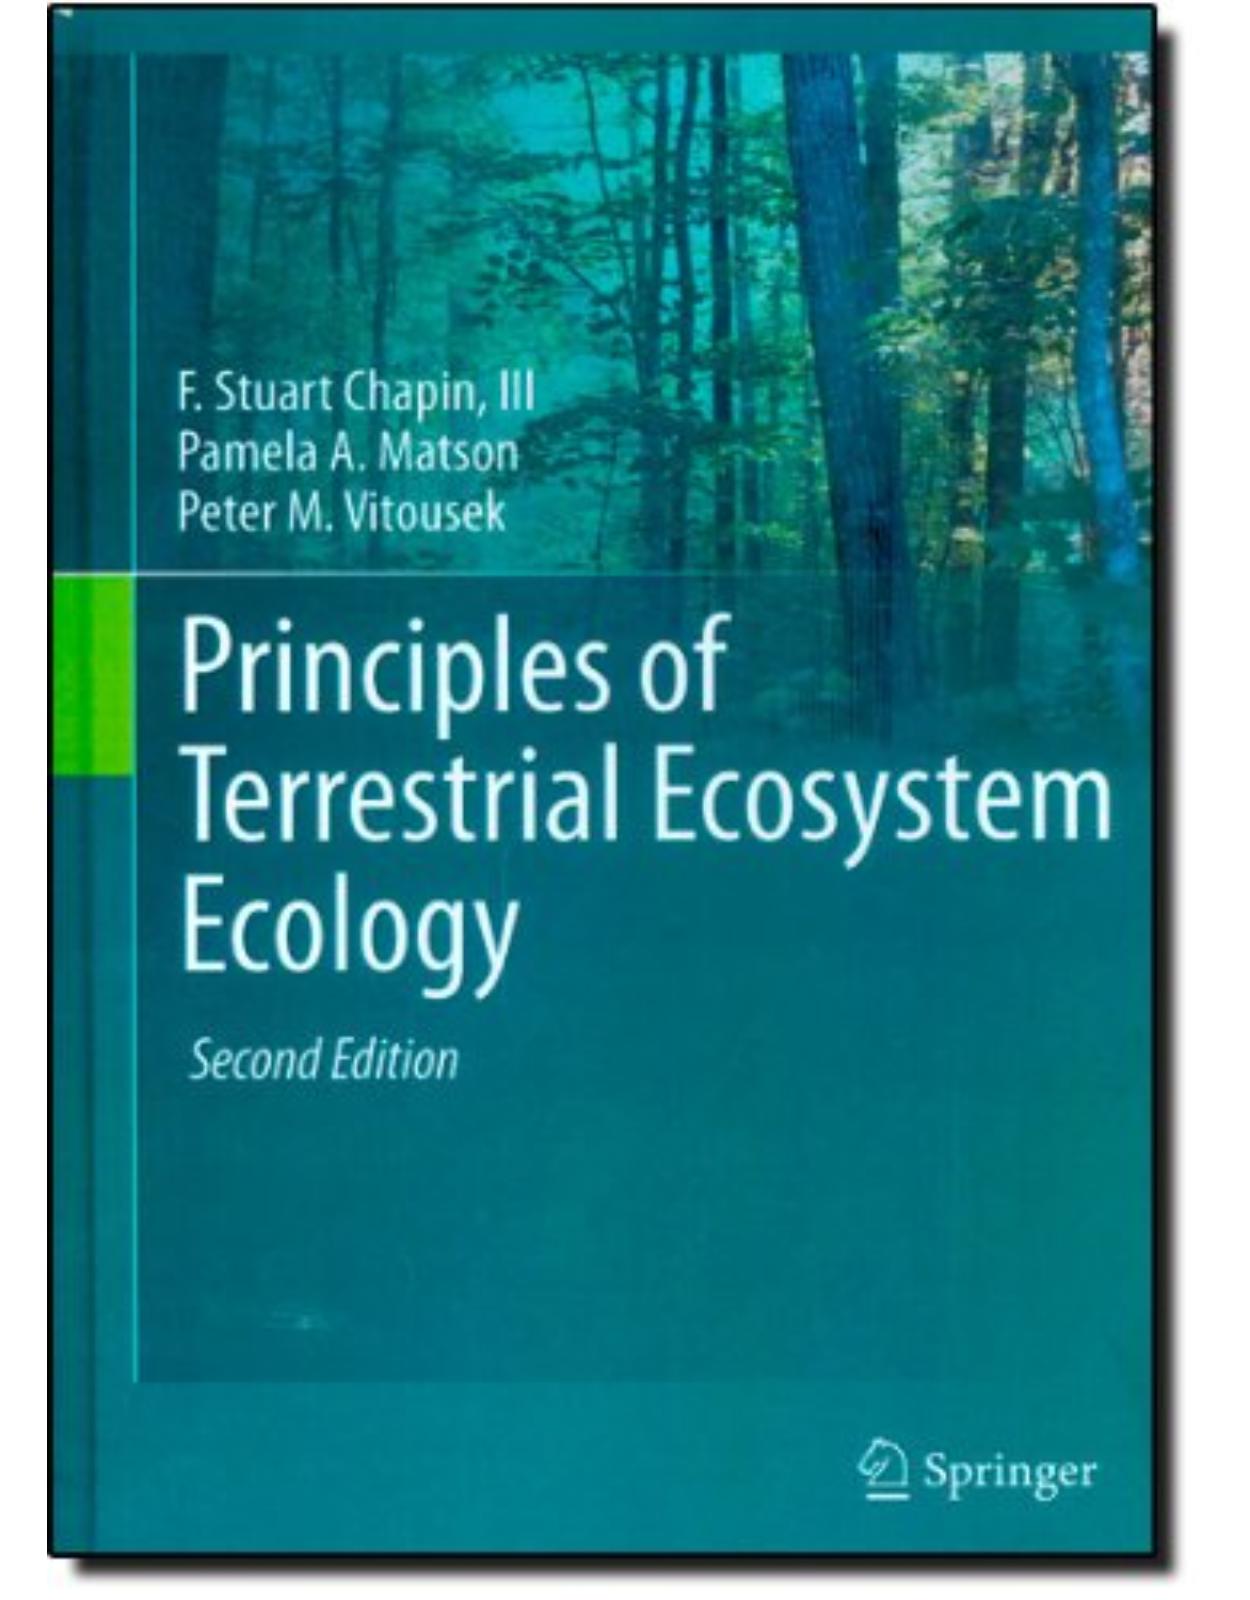 Principles of Terrestrial Ecosystem Ecology